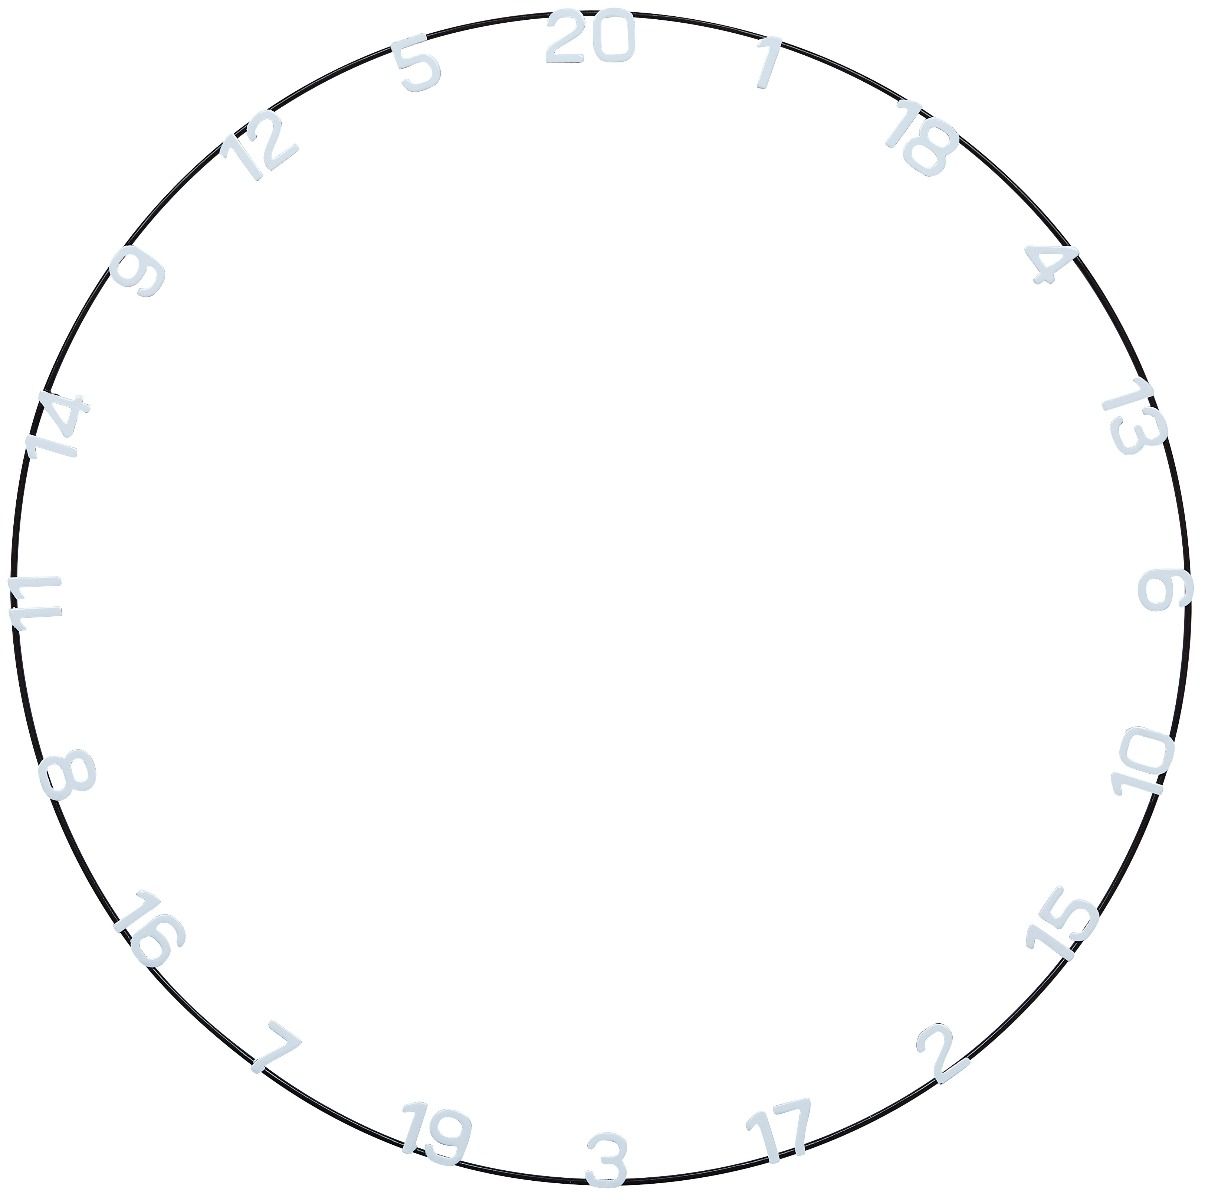 Unicorn Eclipse Ultra Number Ring - darts-corner - UNICORN